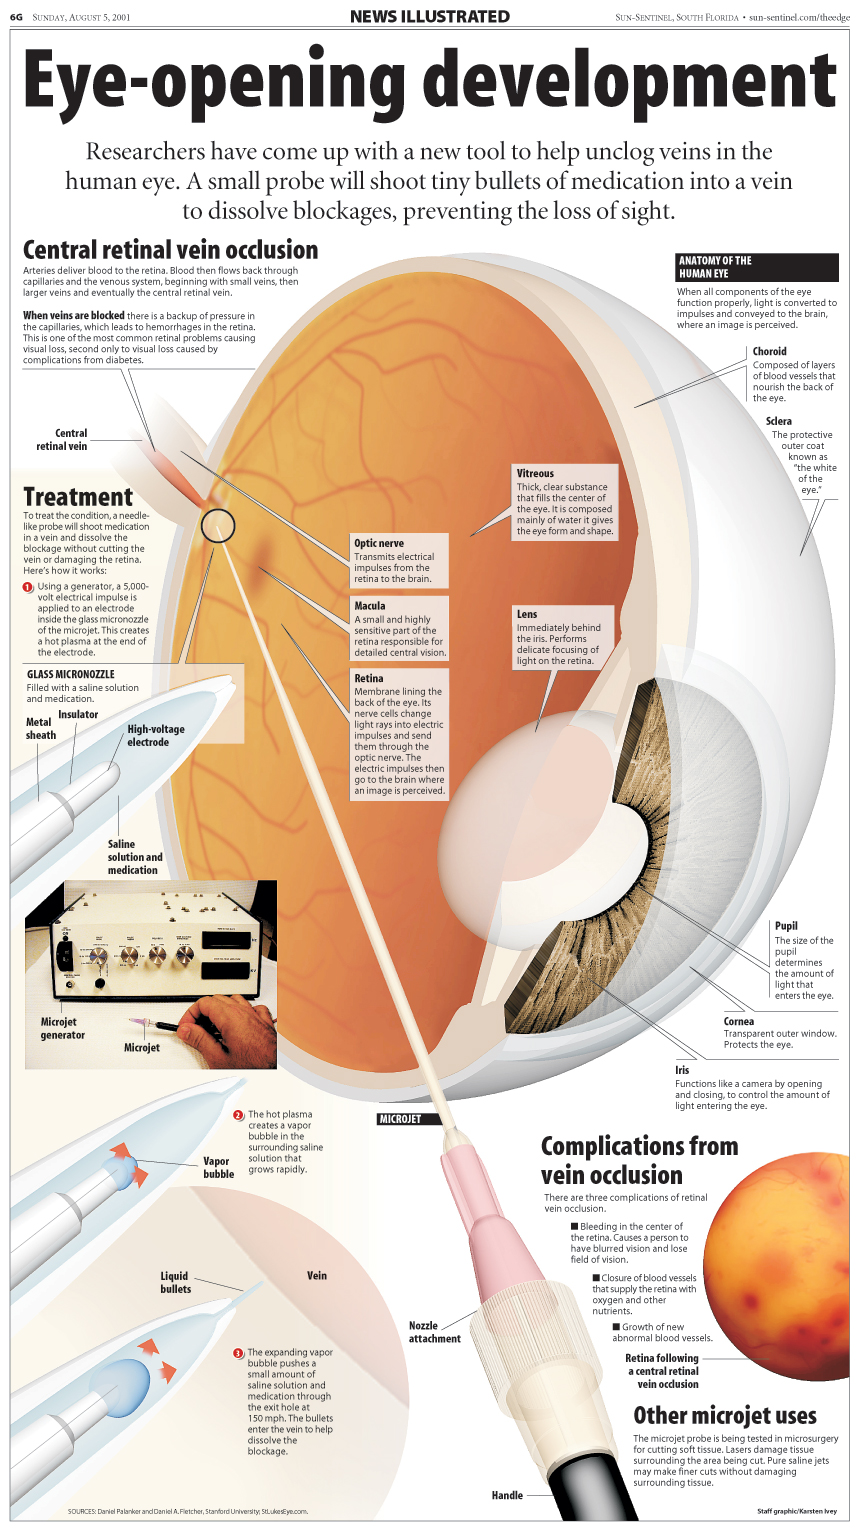 Eye opening development News Illustrated infographic